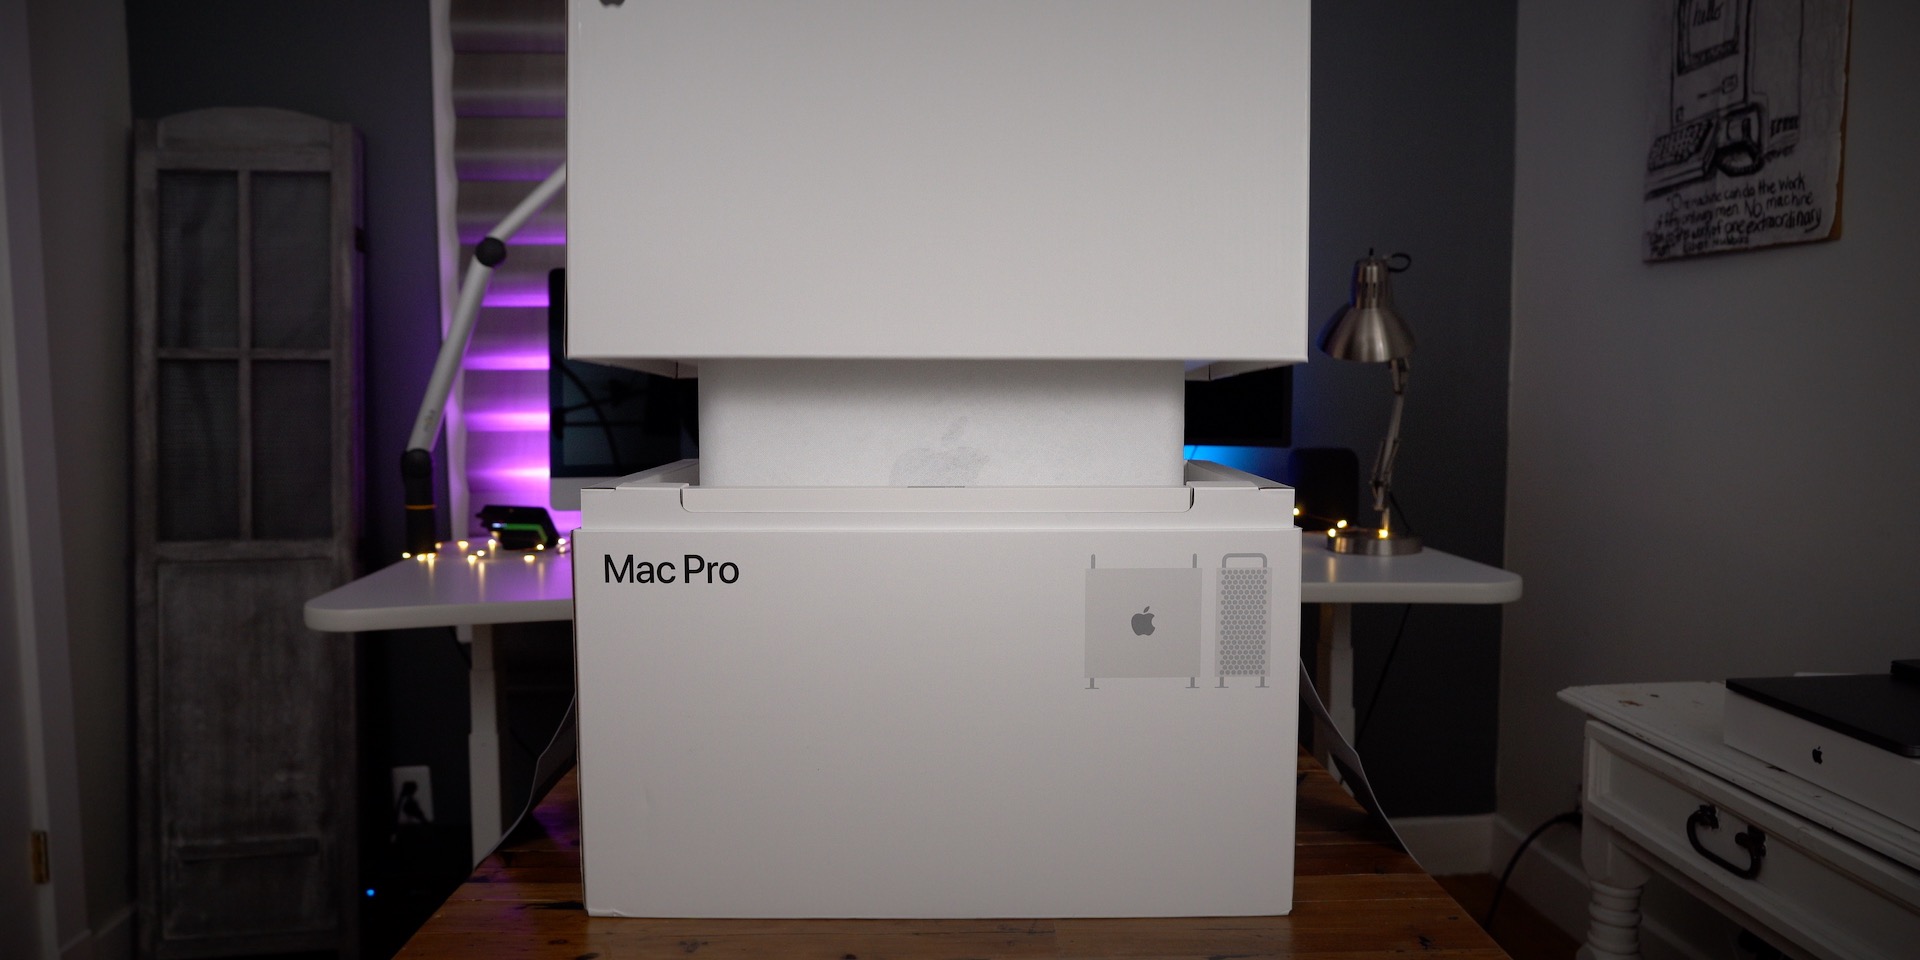 Mac Pro unboxing